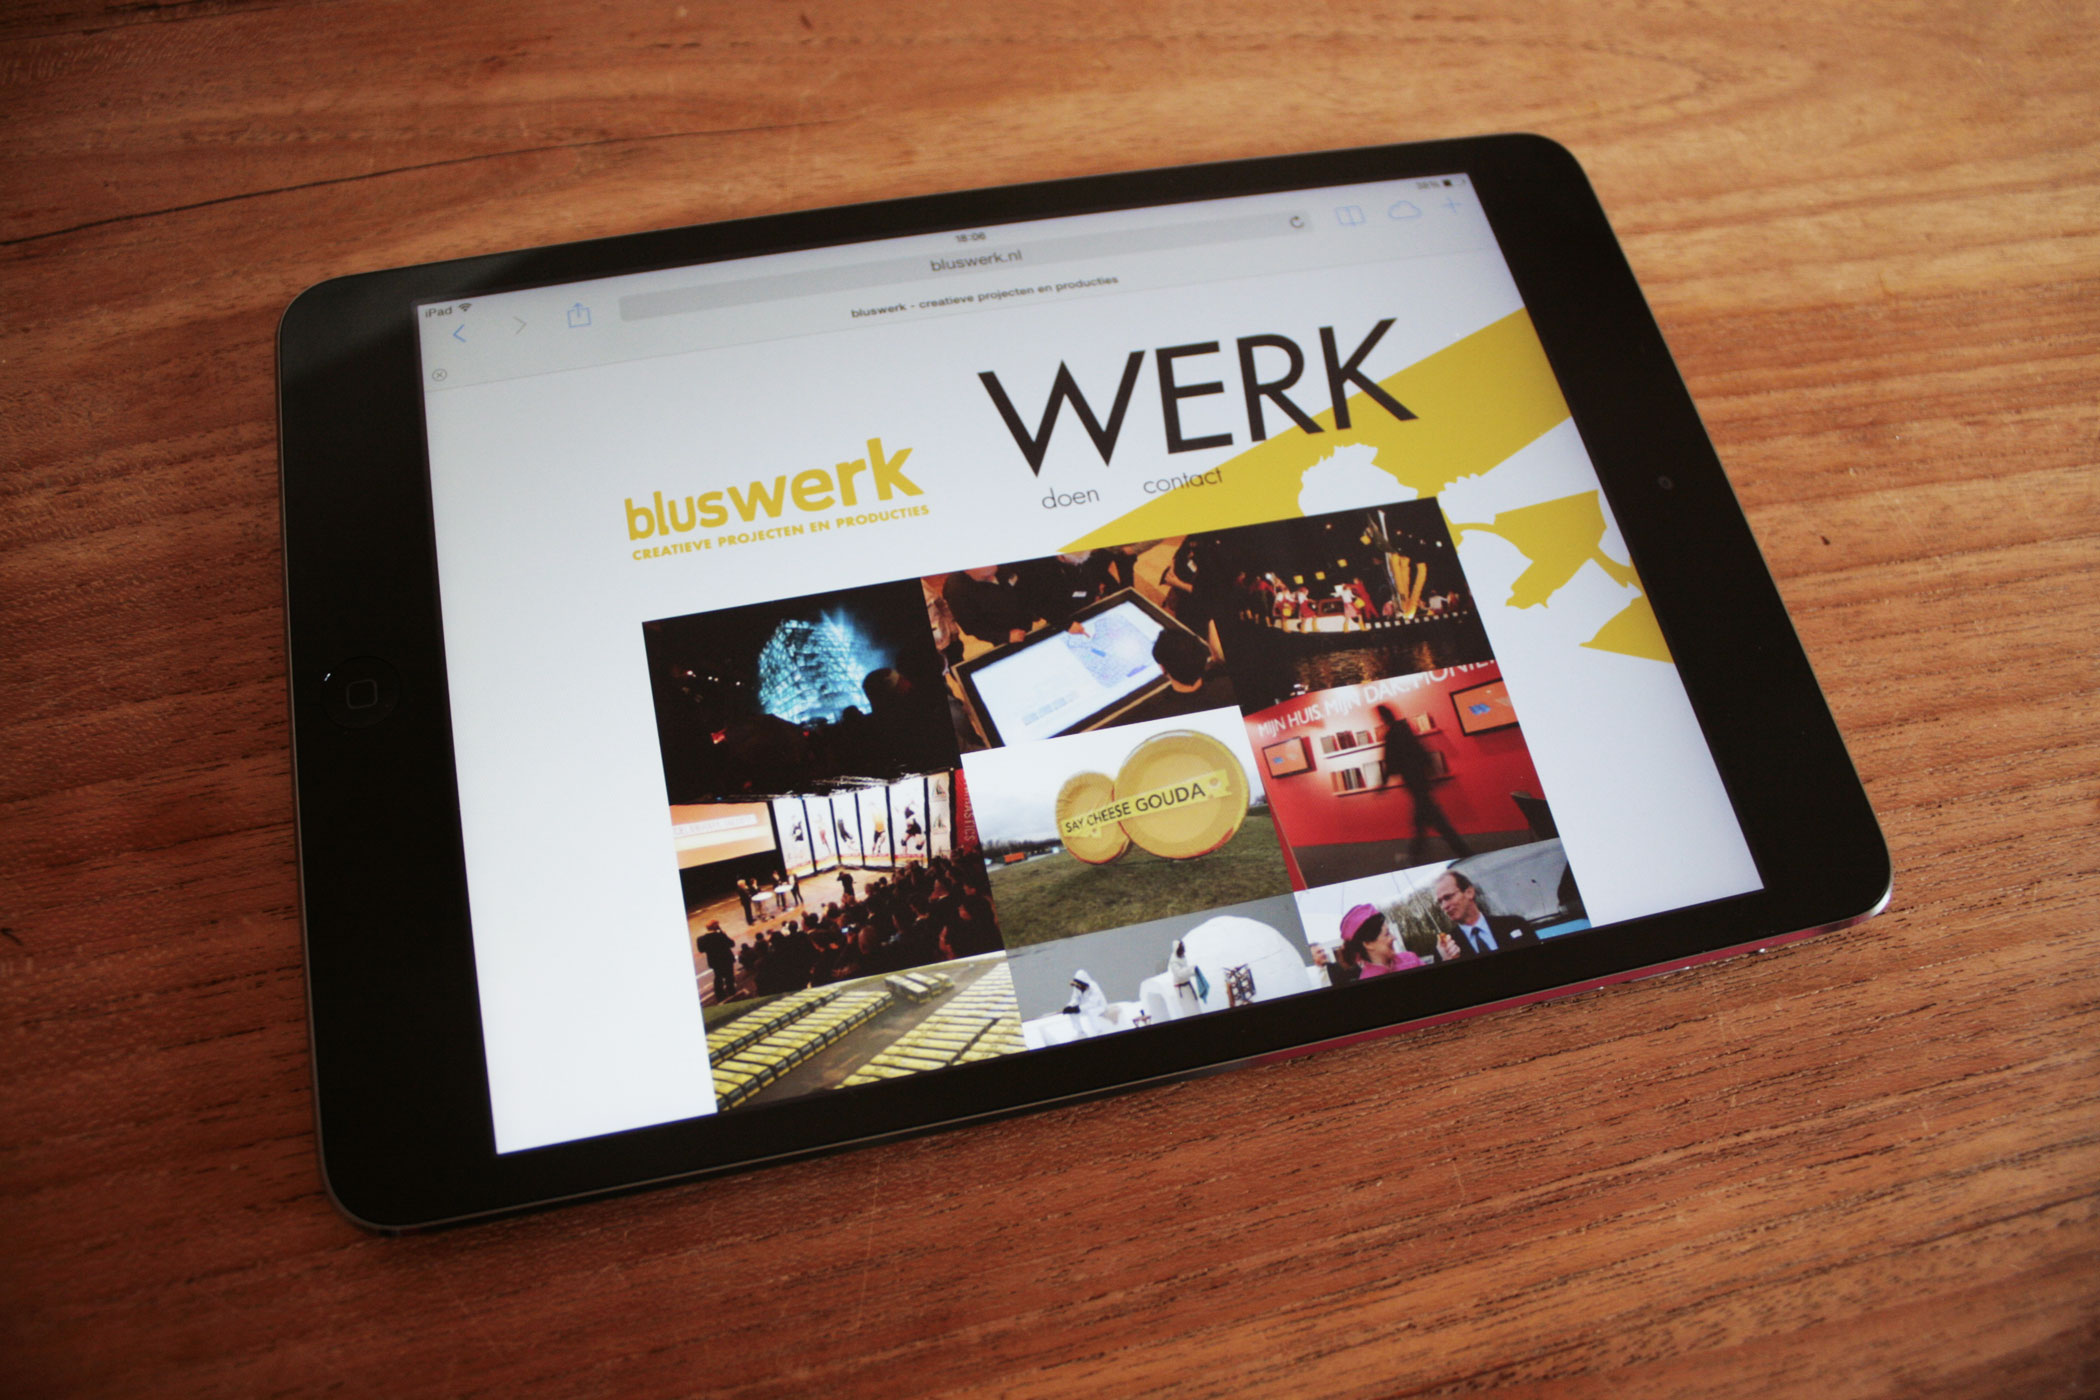 Bluswerk website tablet en dekstop